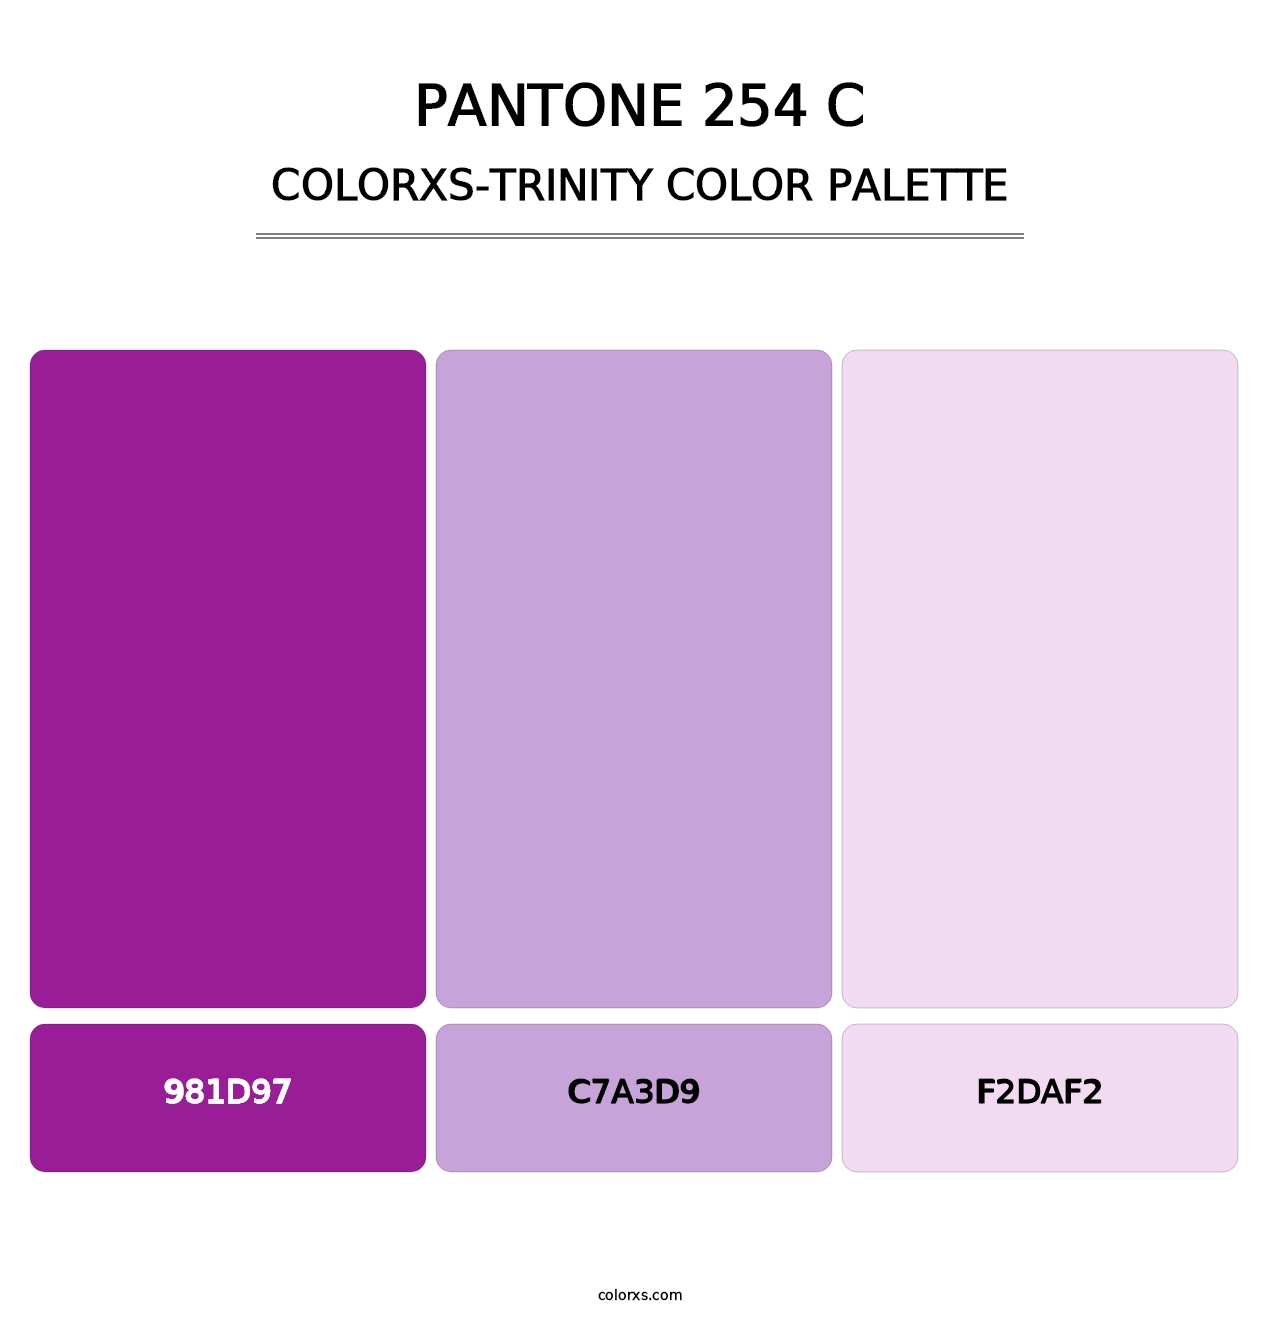 PANTONE 254 C - Colorxs Trinity Palette